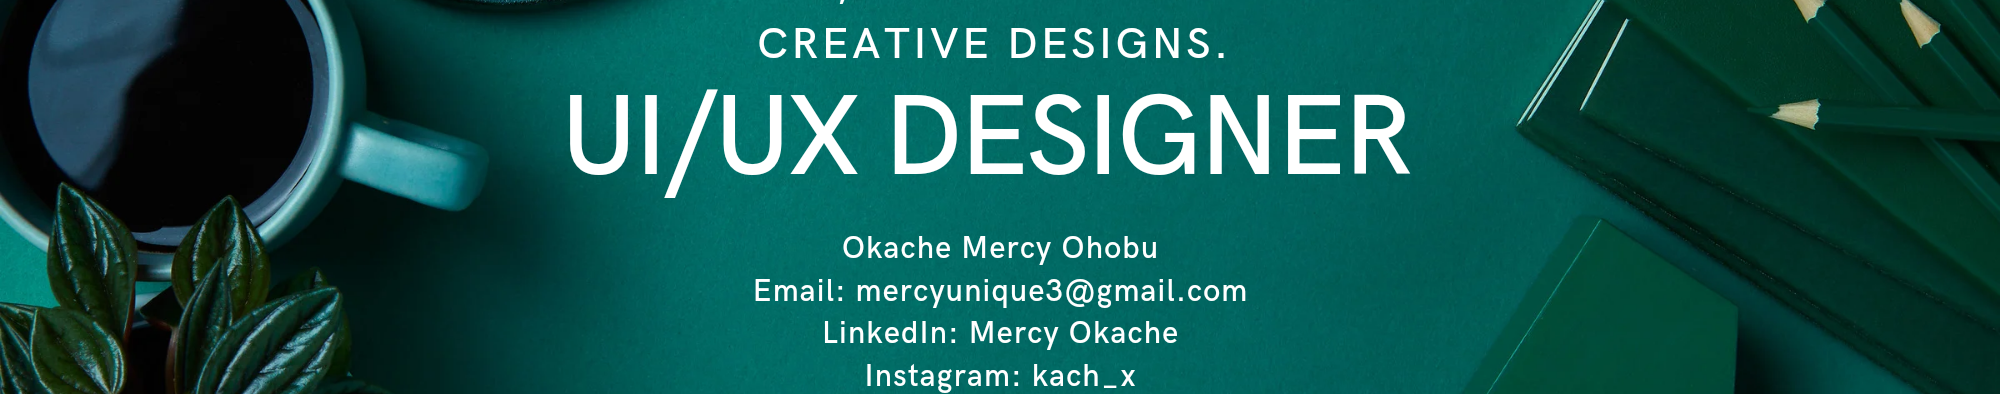 Mercy Ohobu's profile banner